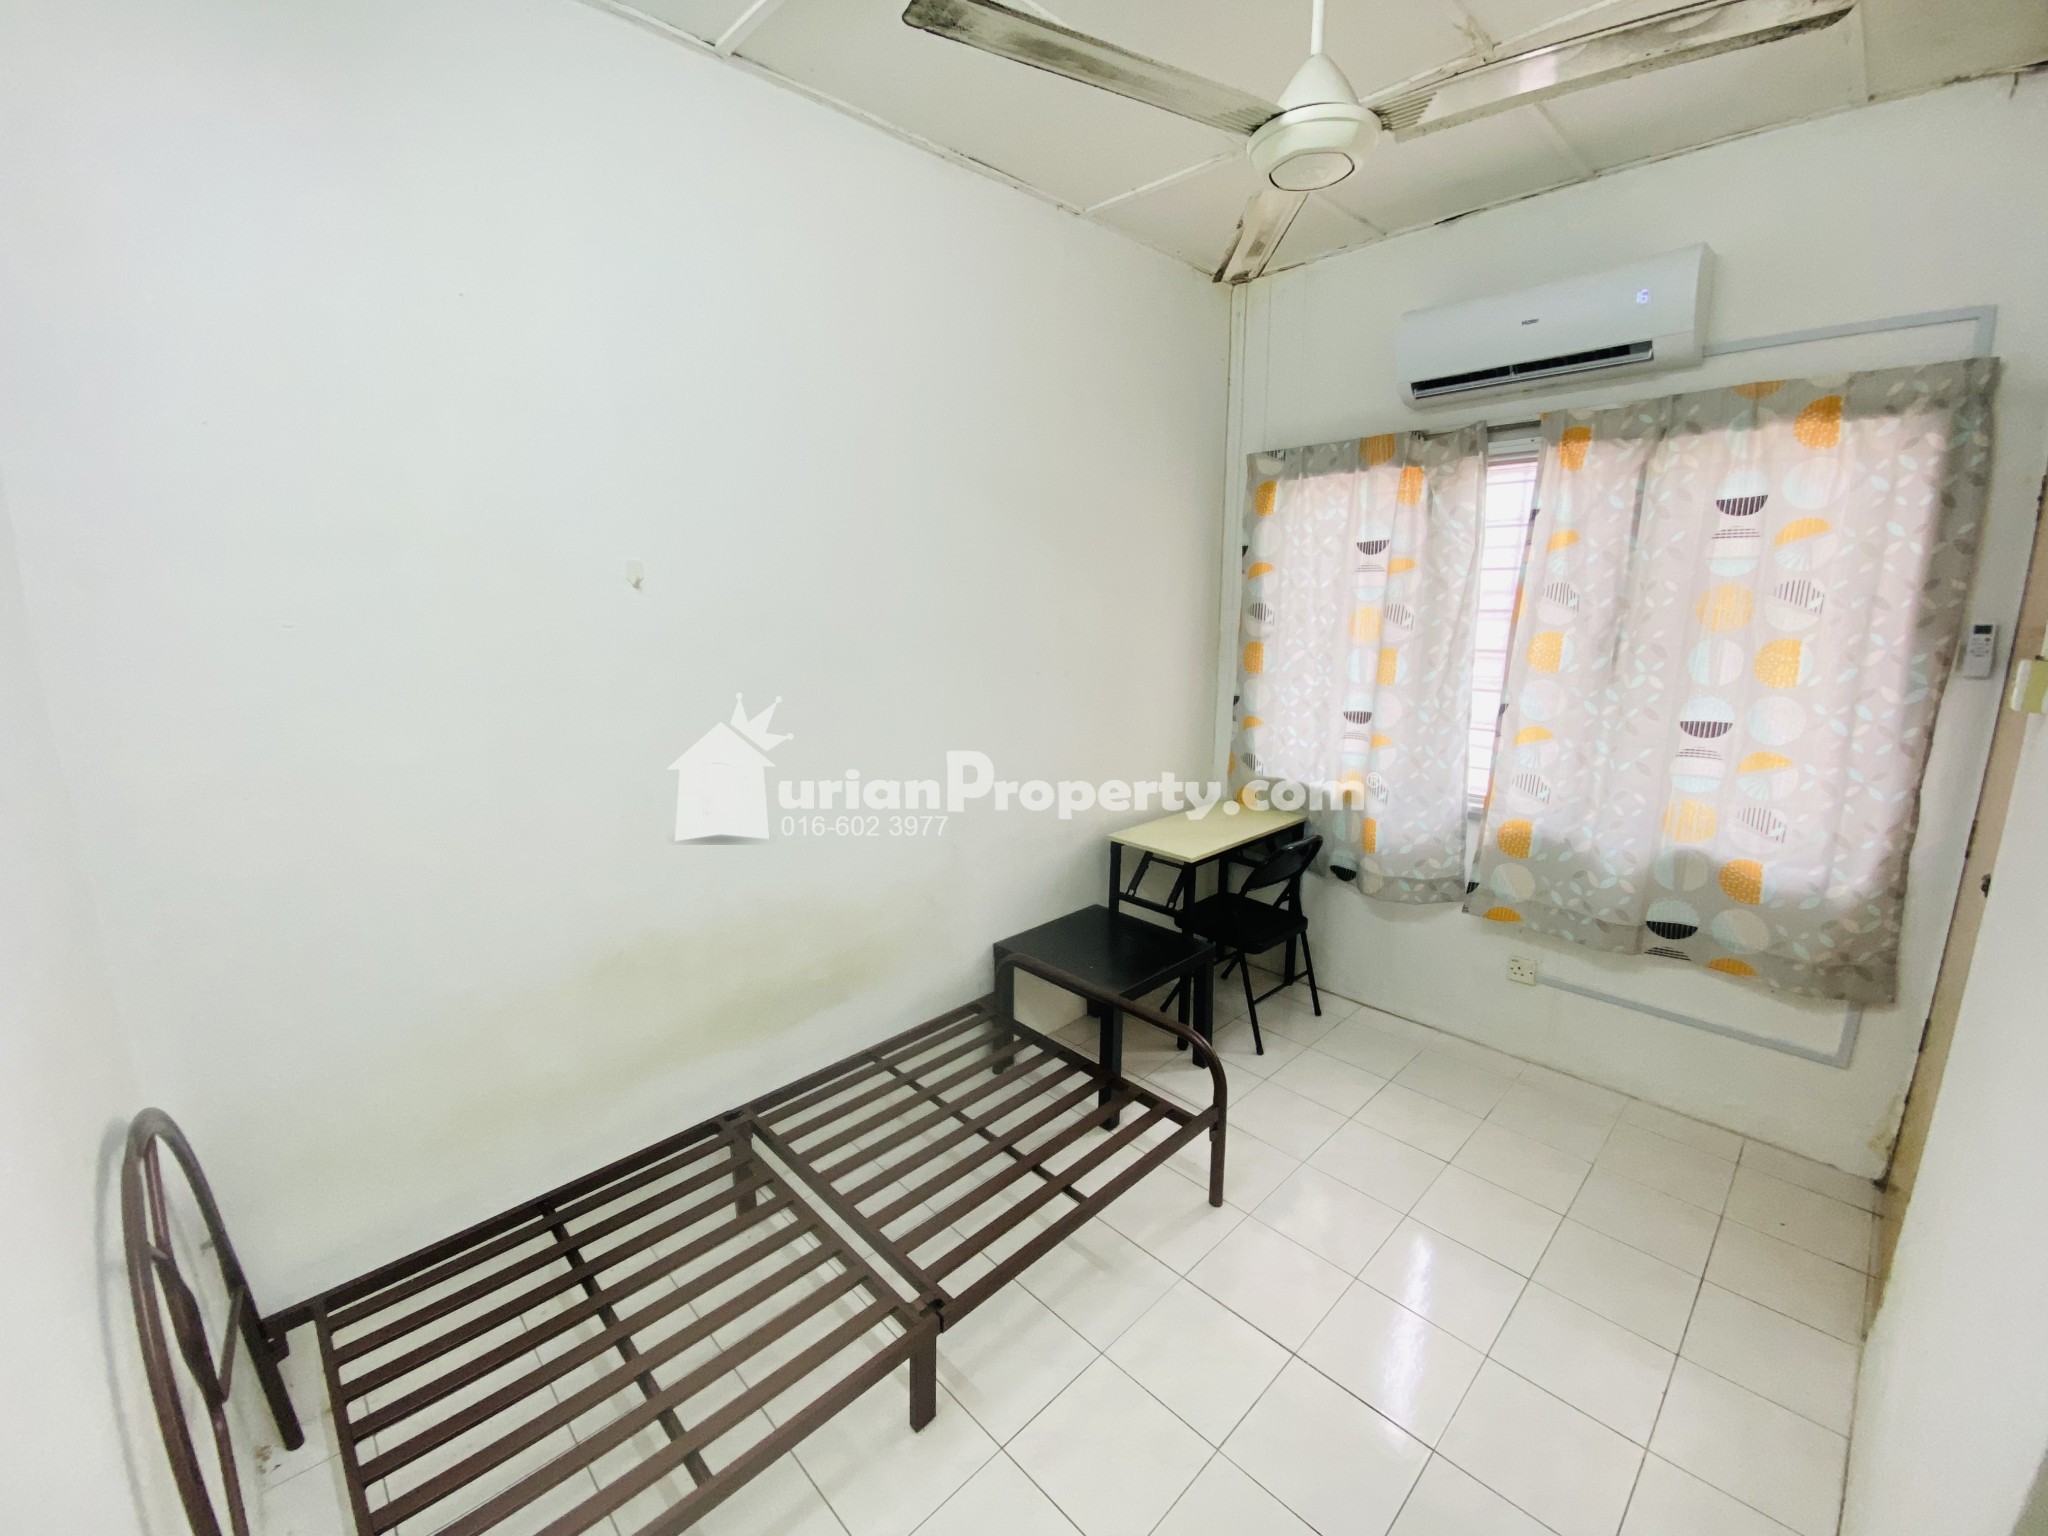 Terrace House Room for Rent at Taman Puncak Jalil